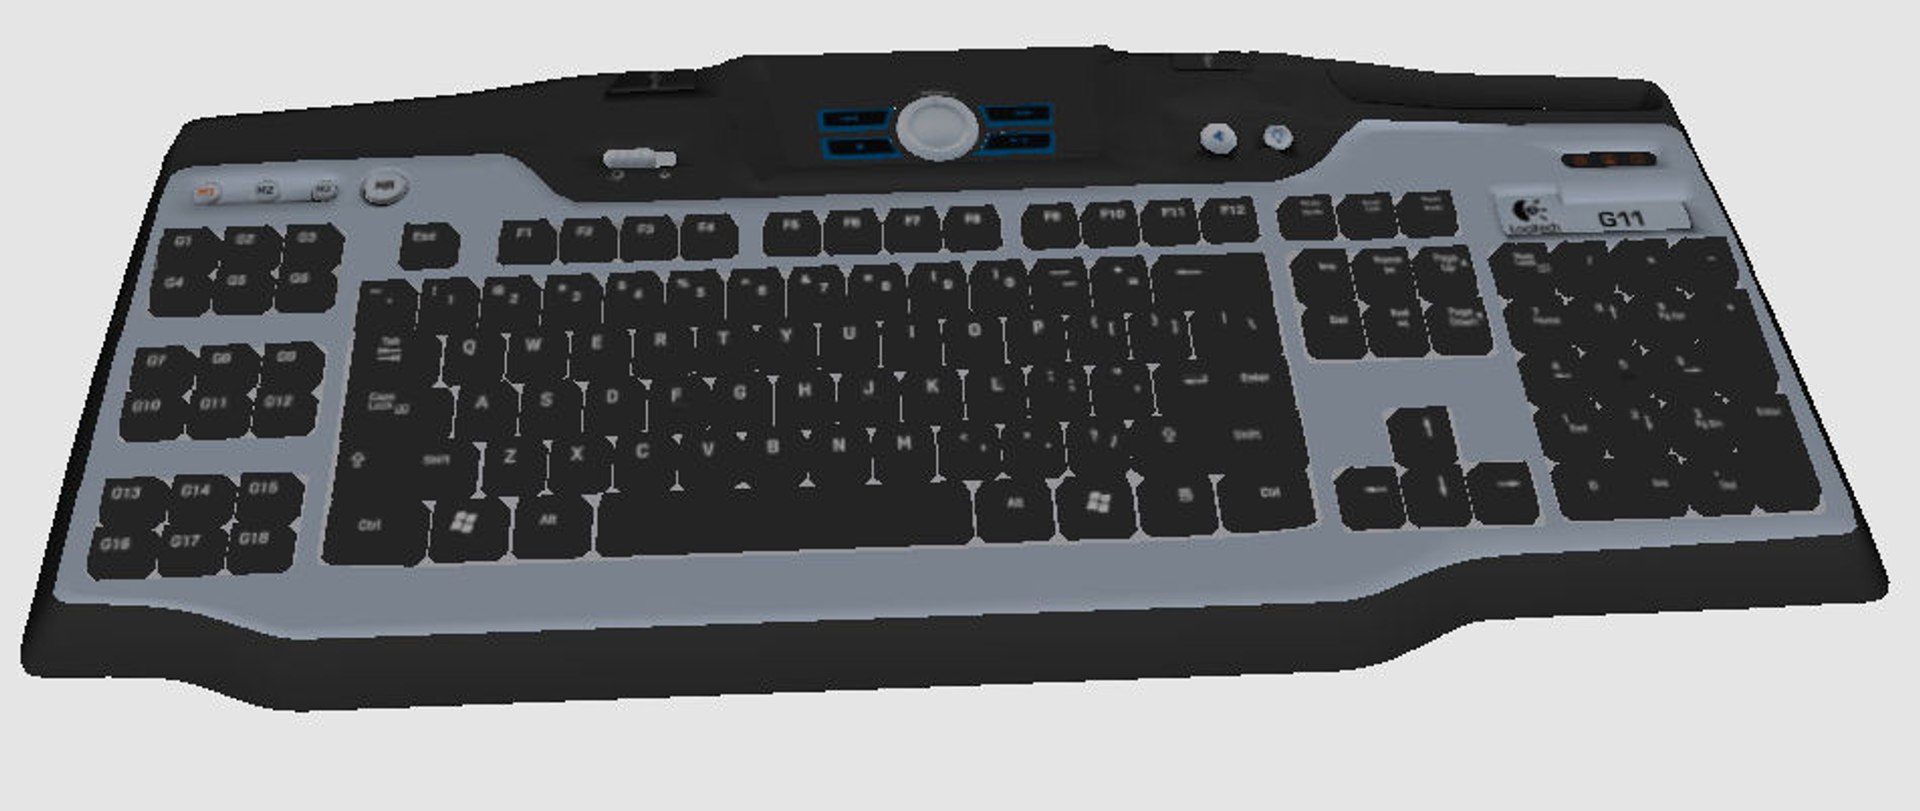 3ds max logitech g11 keyboard